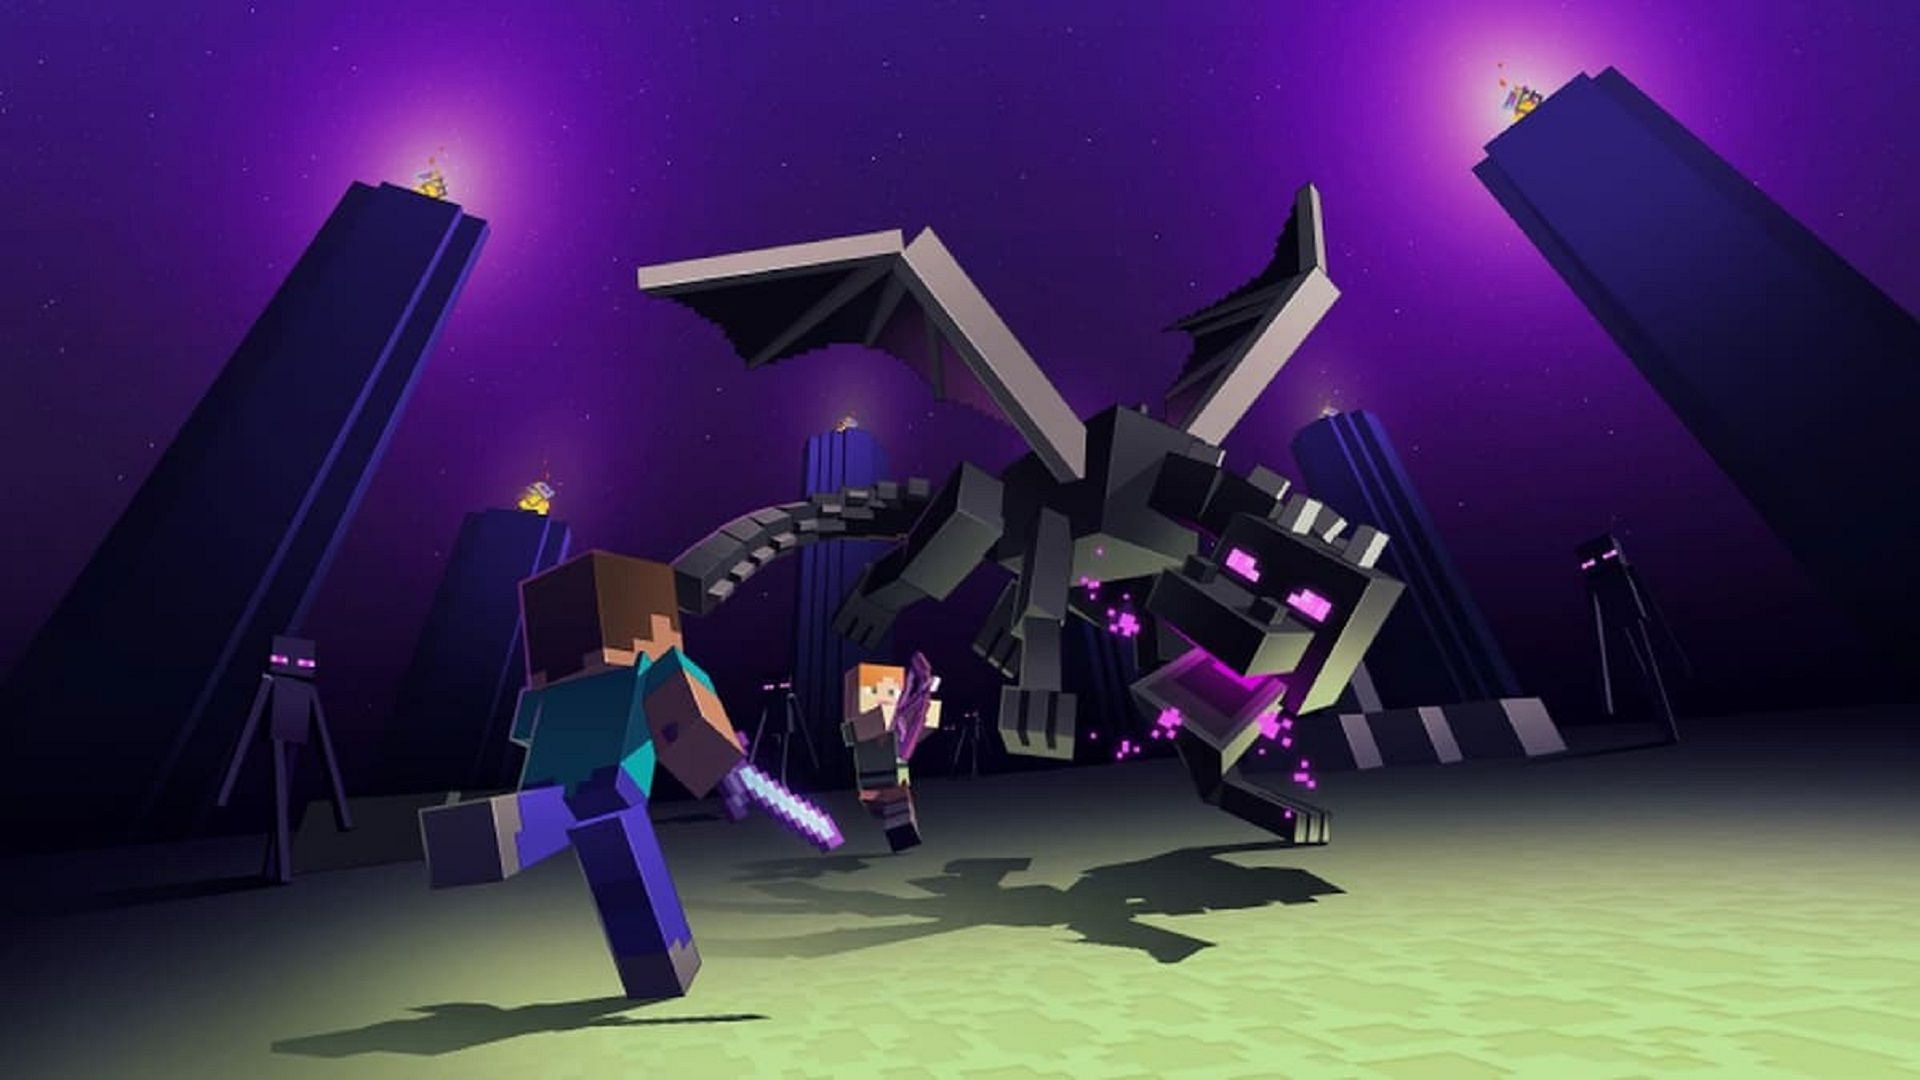 Steve battling the Ender Dragon in Minecraft (Image via Mojang)